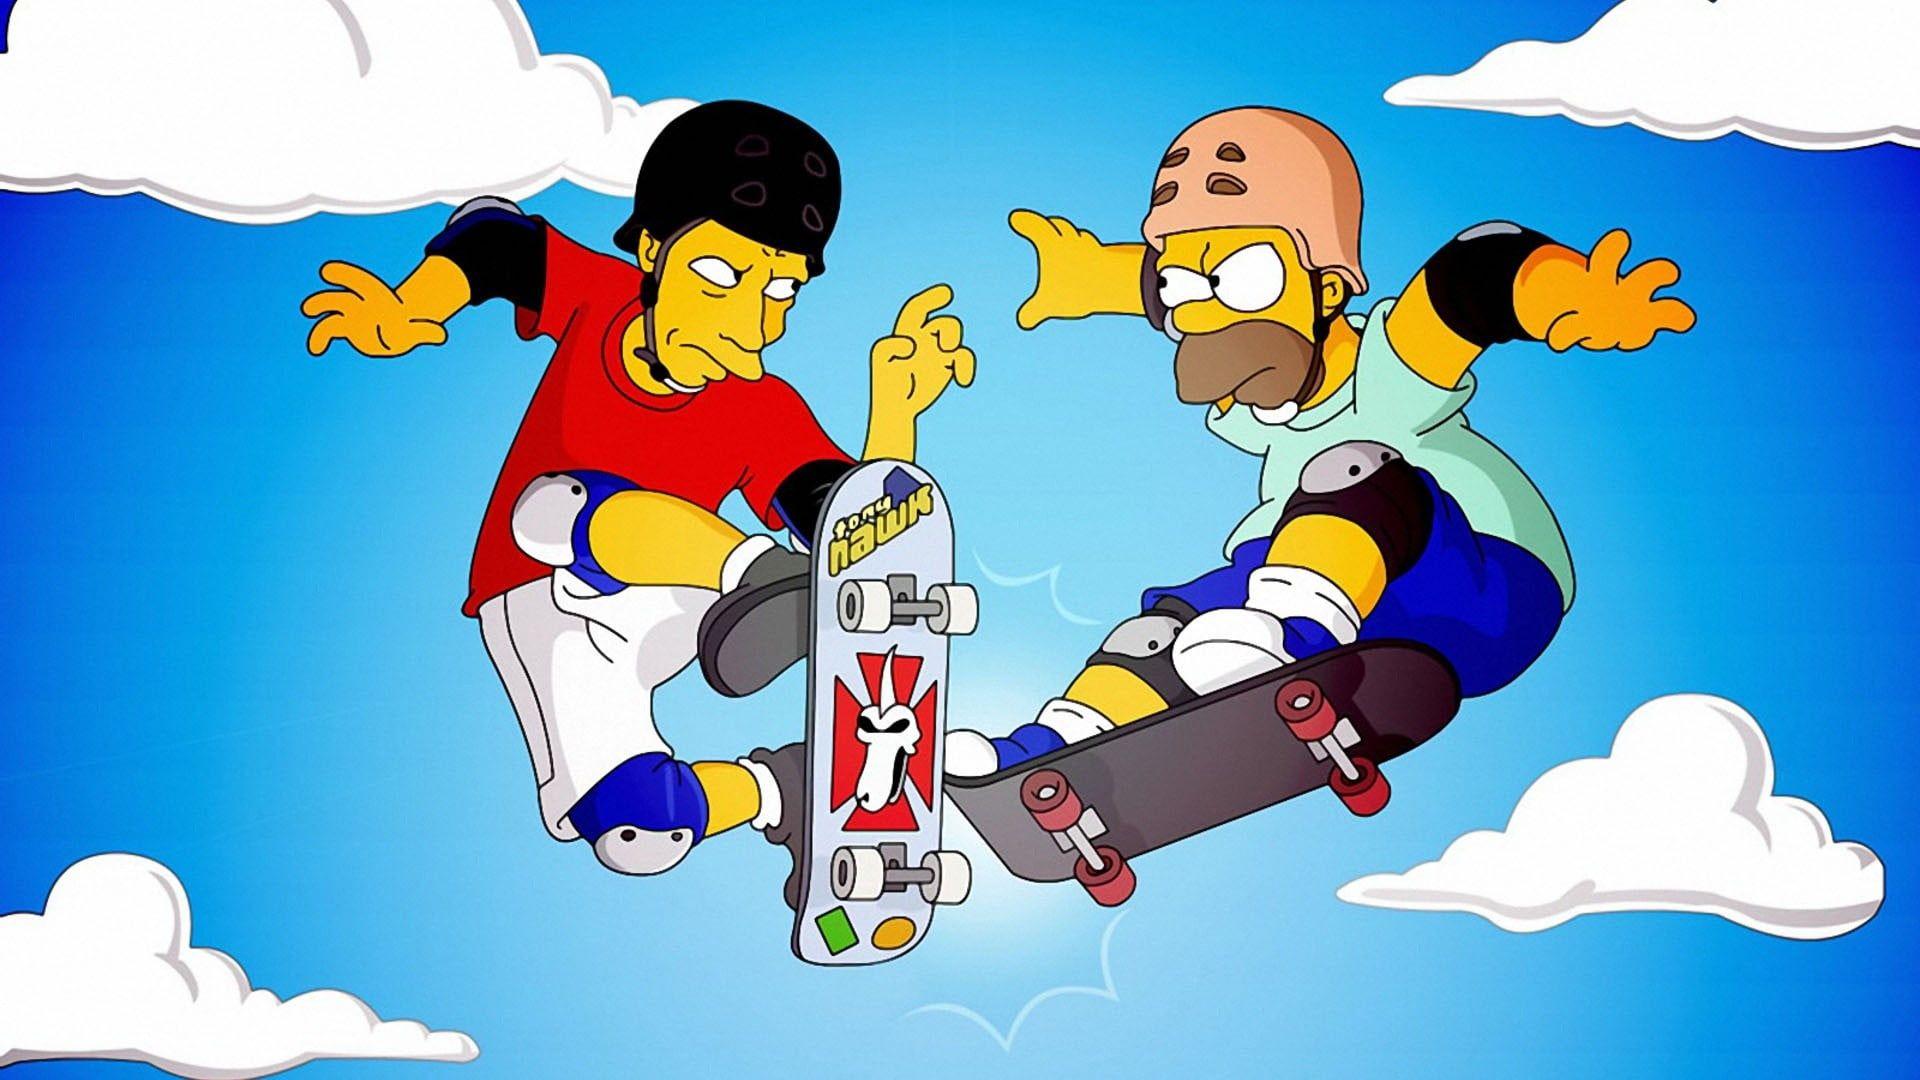 Cartoon Skateboard Wallpapers - Top Hình Ảnh Đẹp